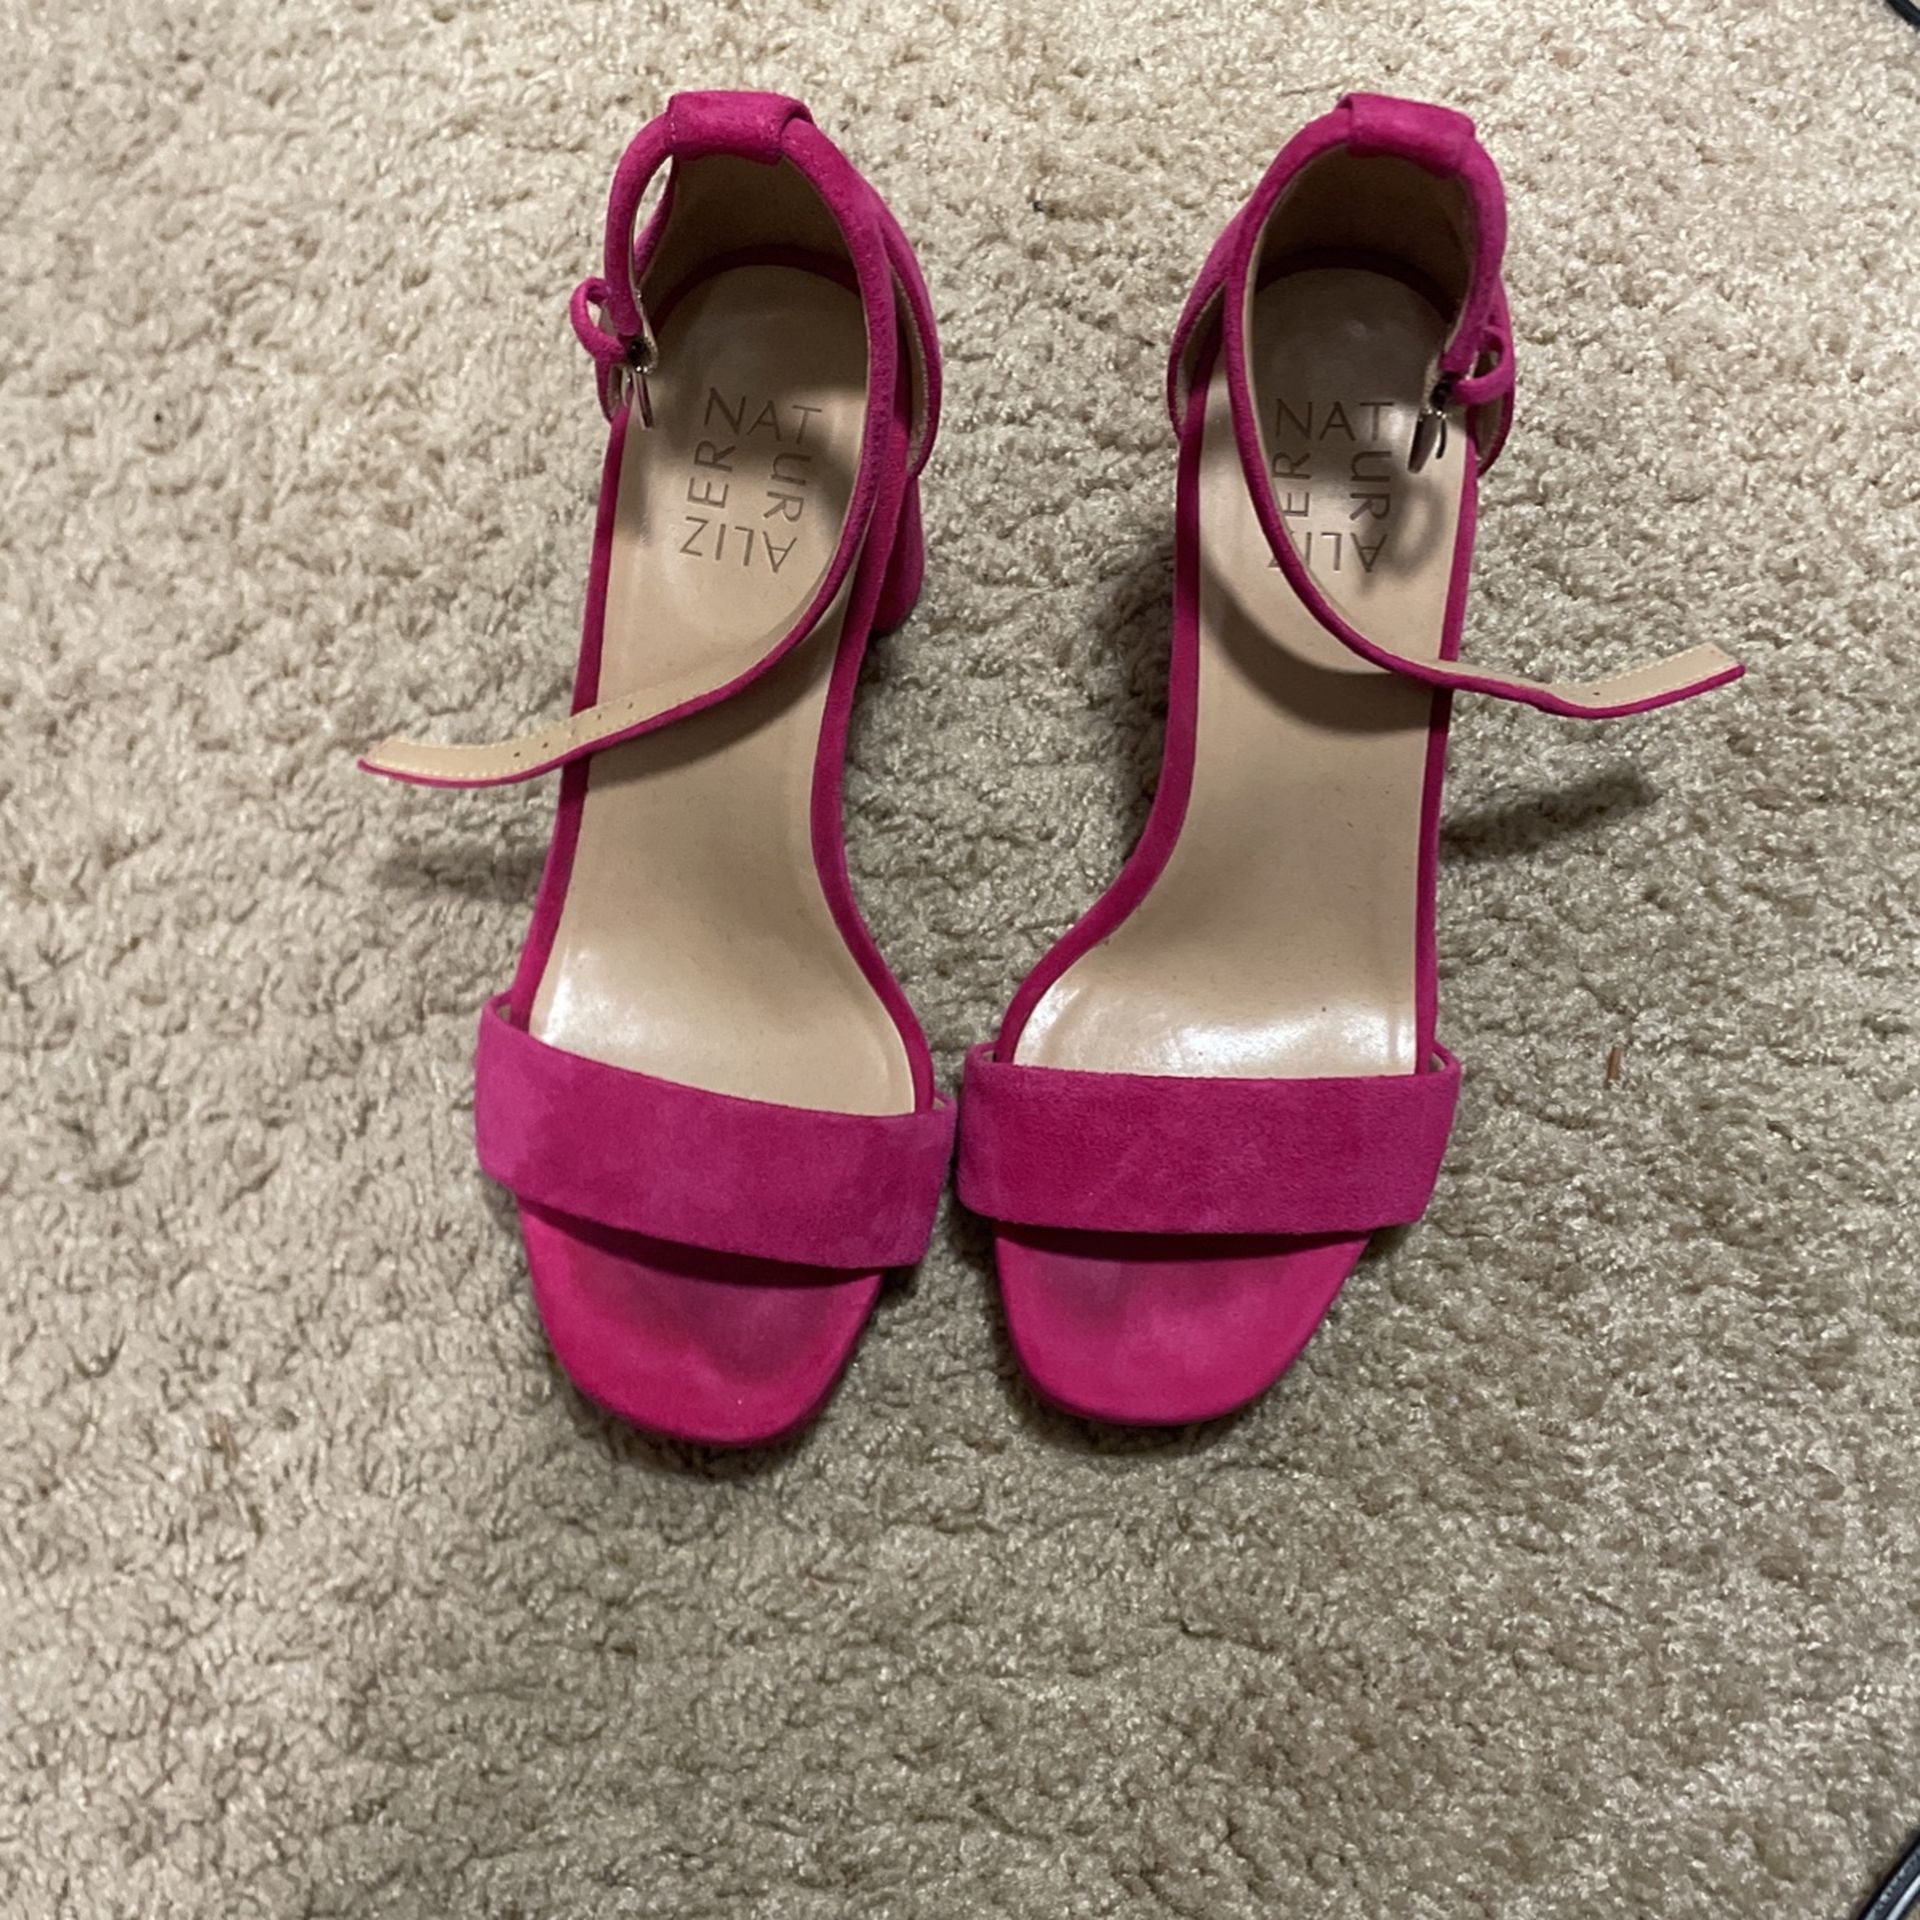 Pink High Heels - Size 8